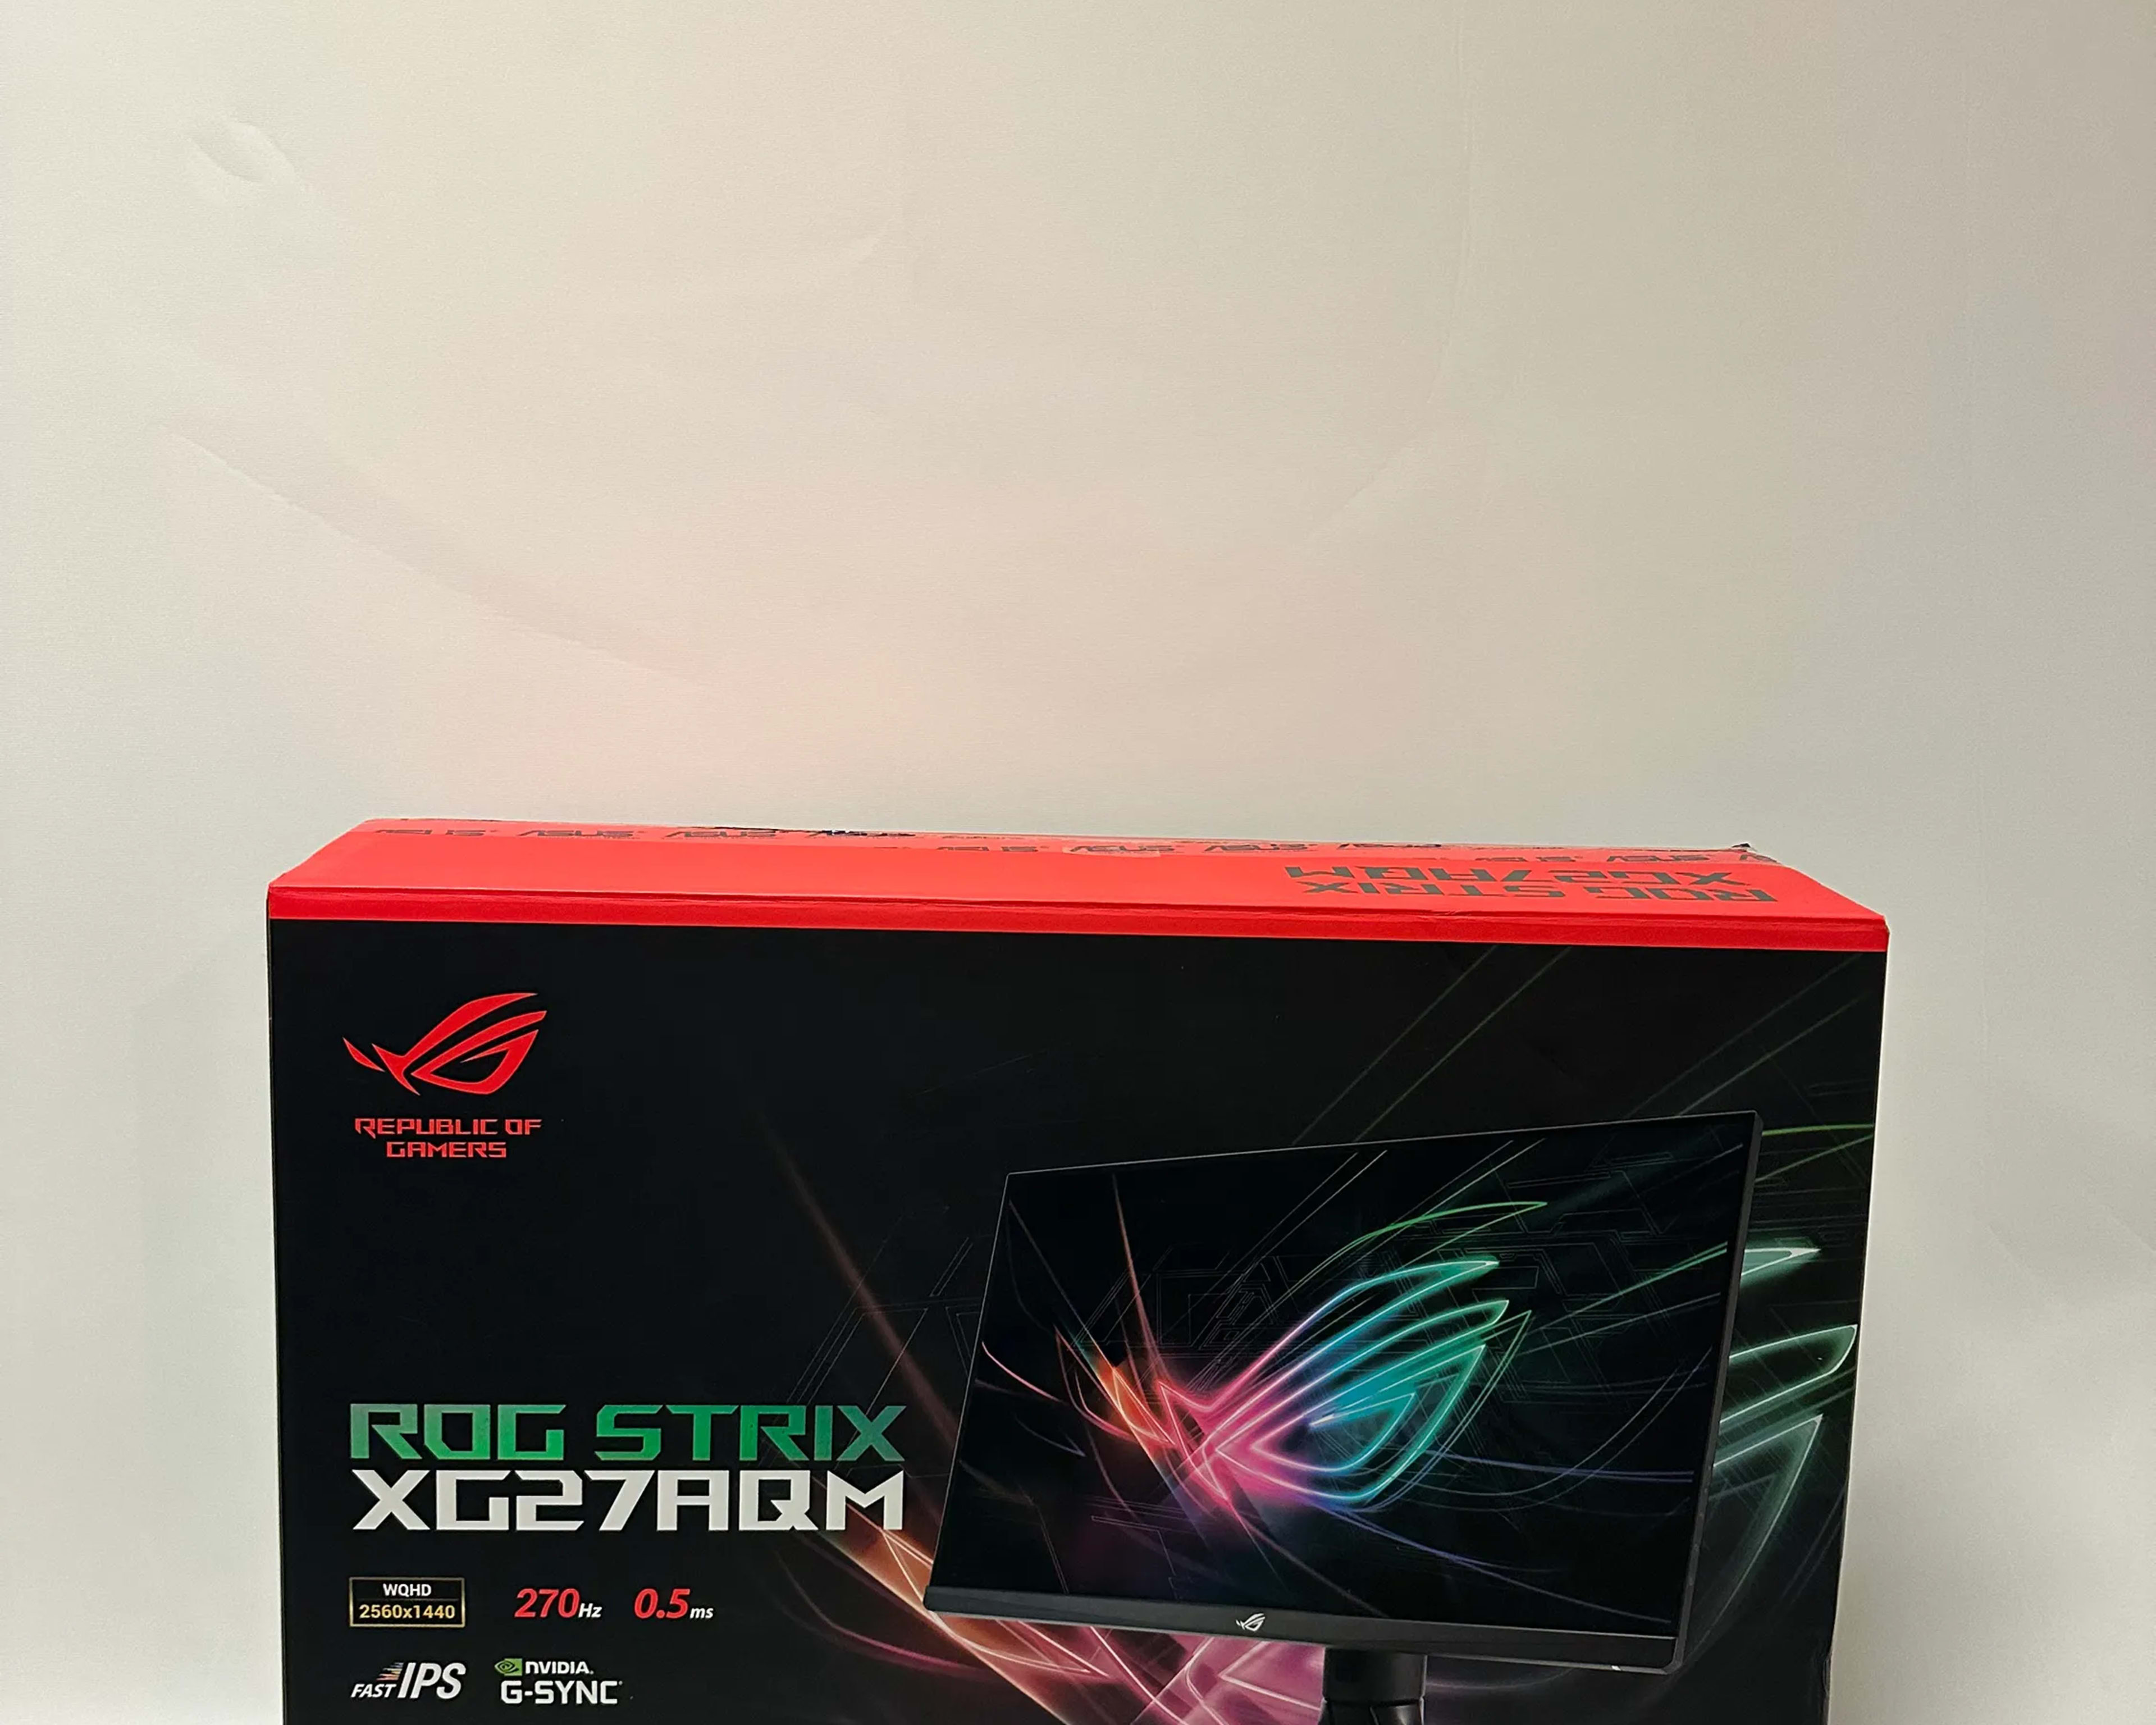 ASUS ROG Strix XG27AQM 27" 2K WQHD (2560 x 1440) 270Hz Wide Screen Gaming Monitor